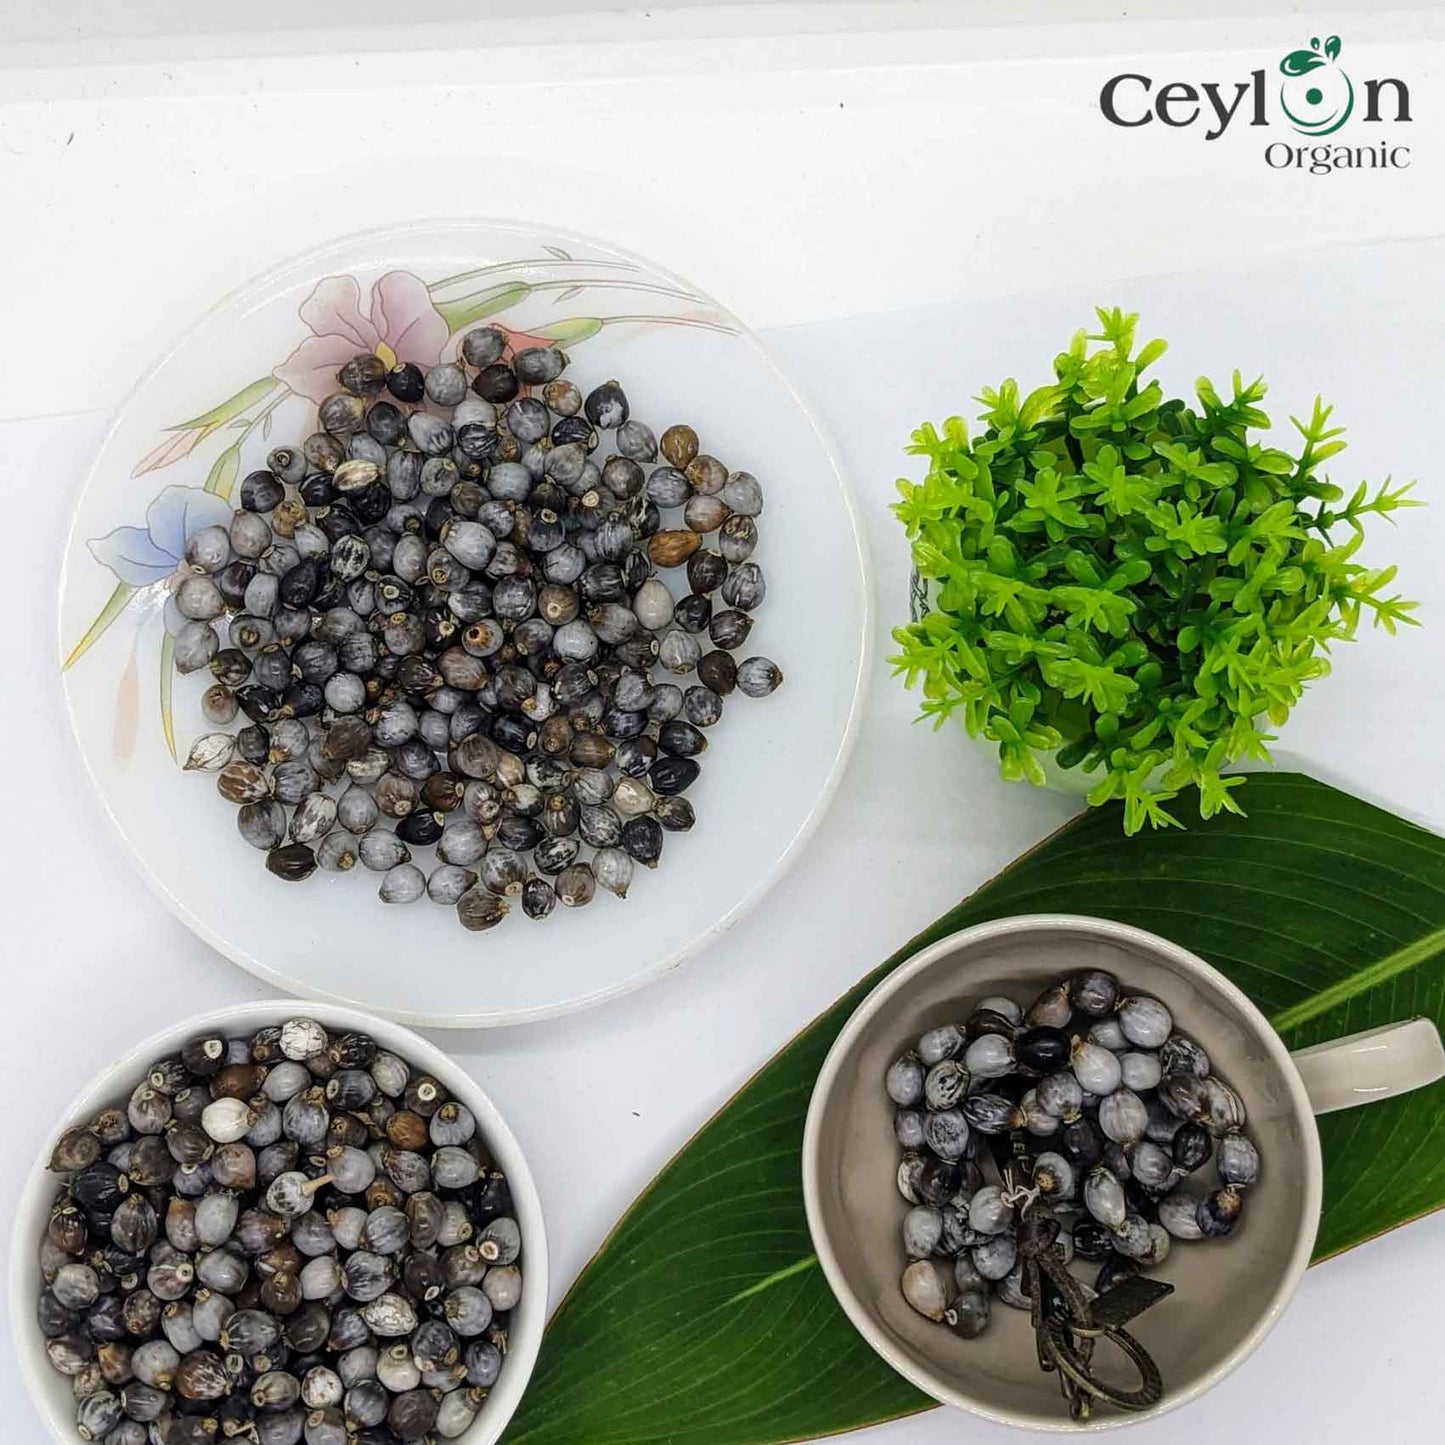 Job's tear beads 100% natural adlay millet Coix lacryma jobi Corn beads | Ceylon Organic-2